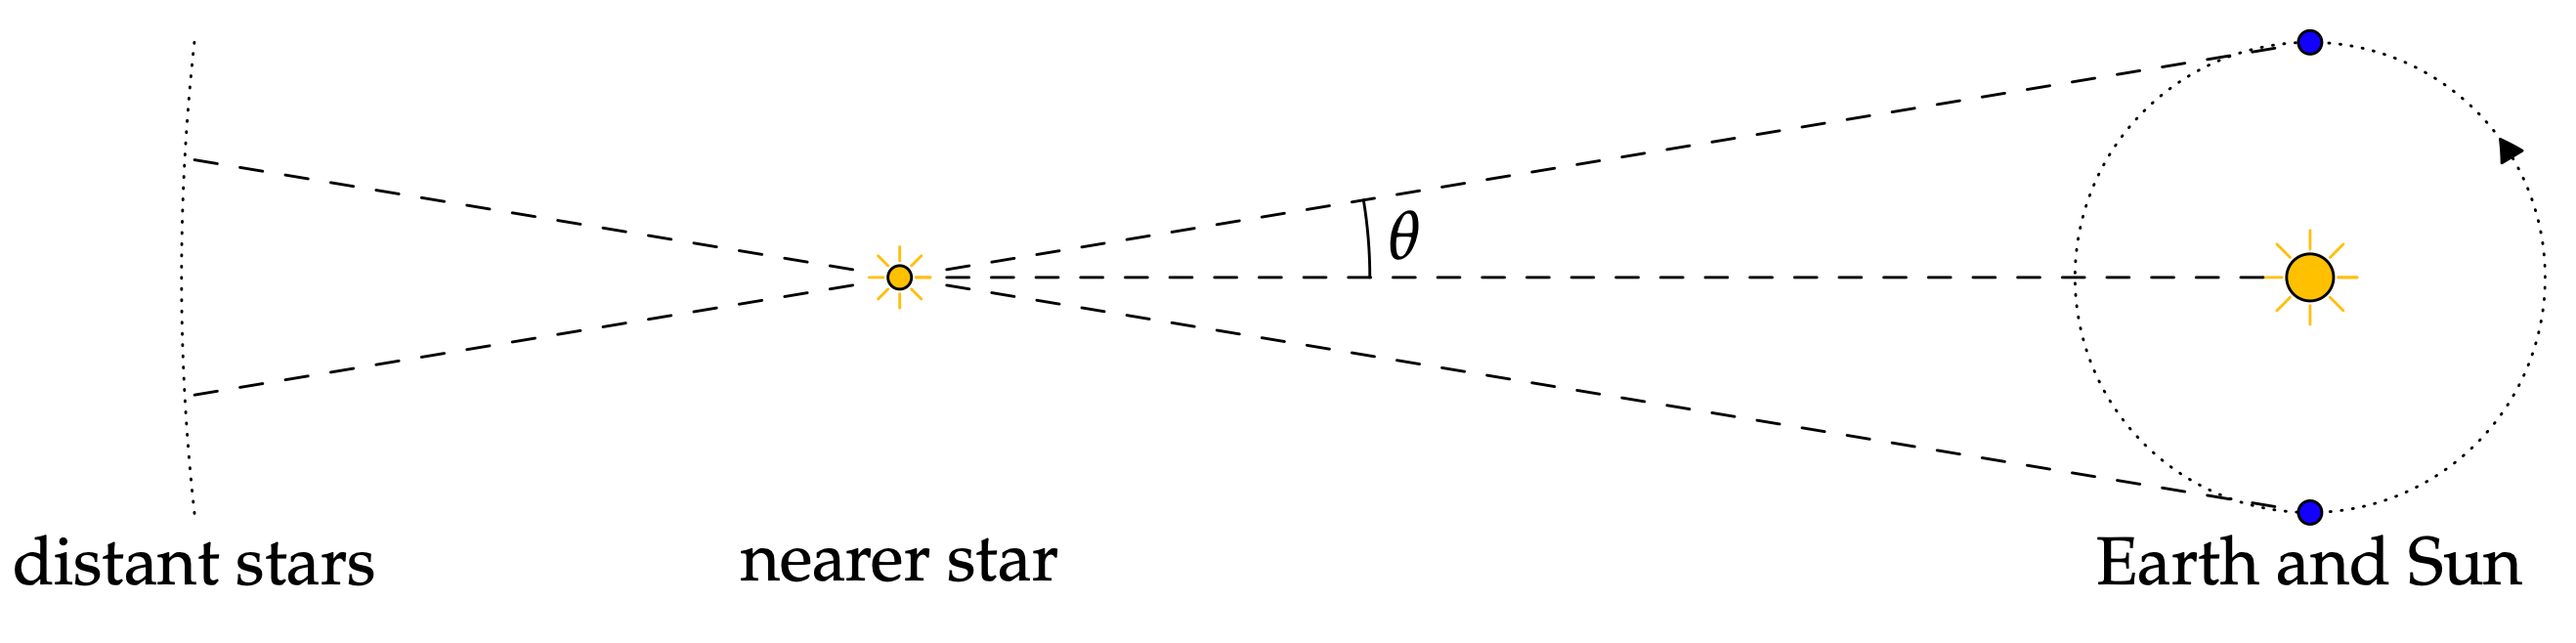 príklad astronómie - obrázok www.math.uci.edu